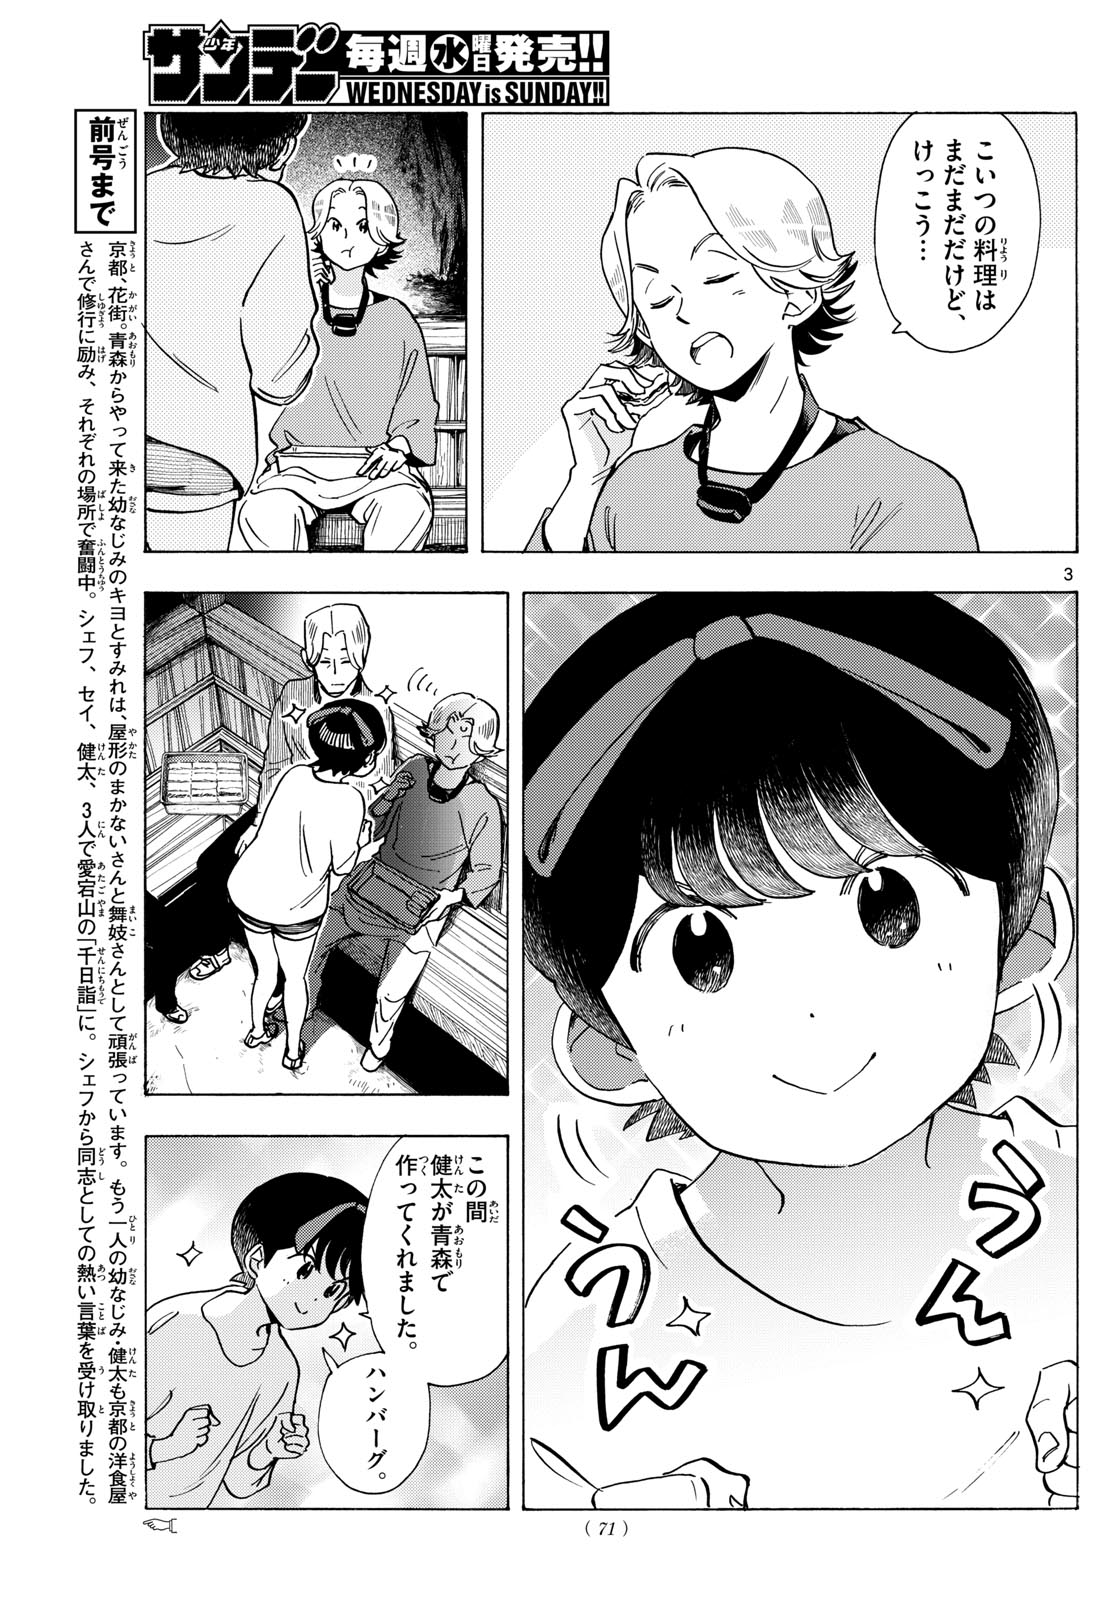 Maiko-san Chi no Makanai-san - Chapter 296 - Page 3